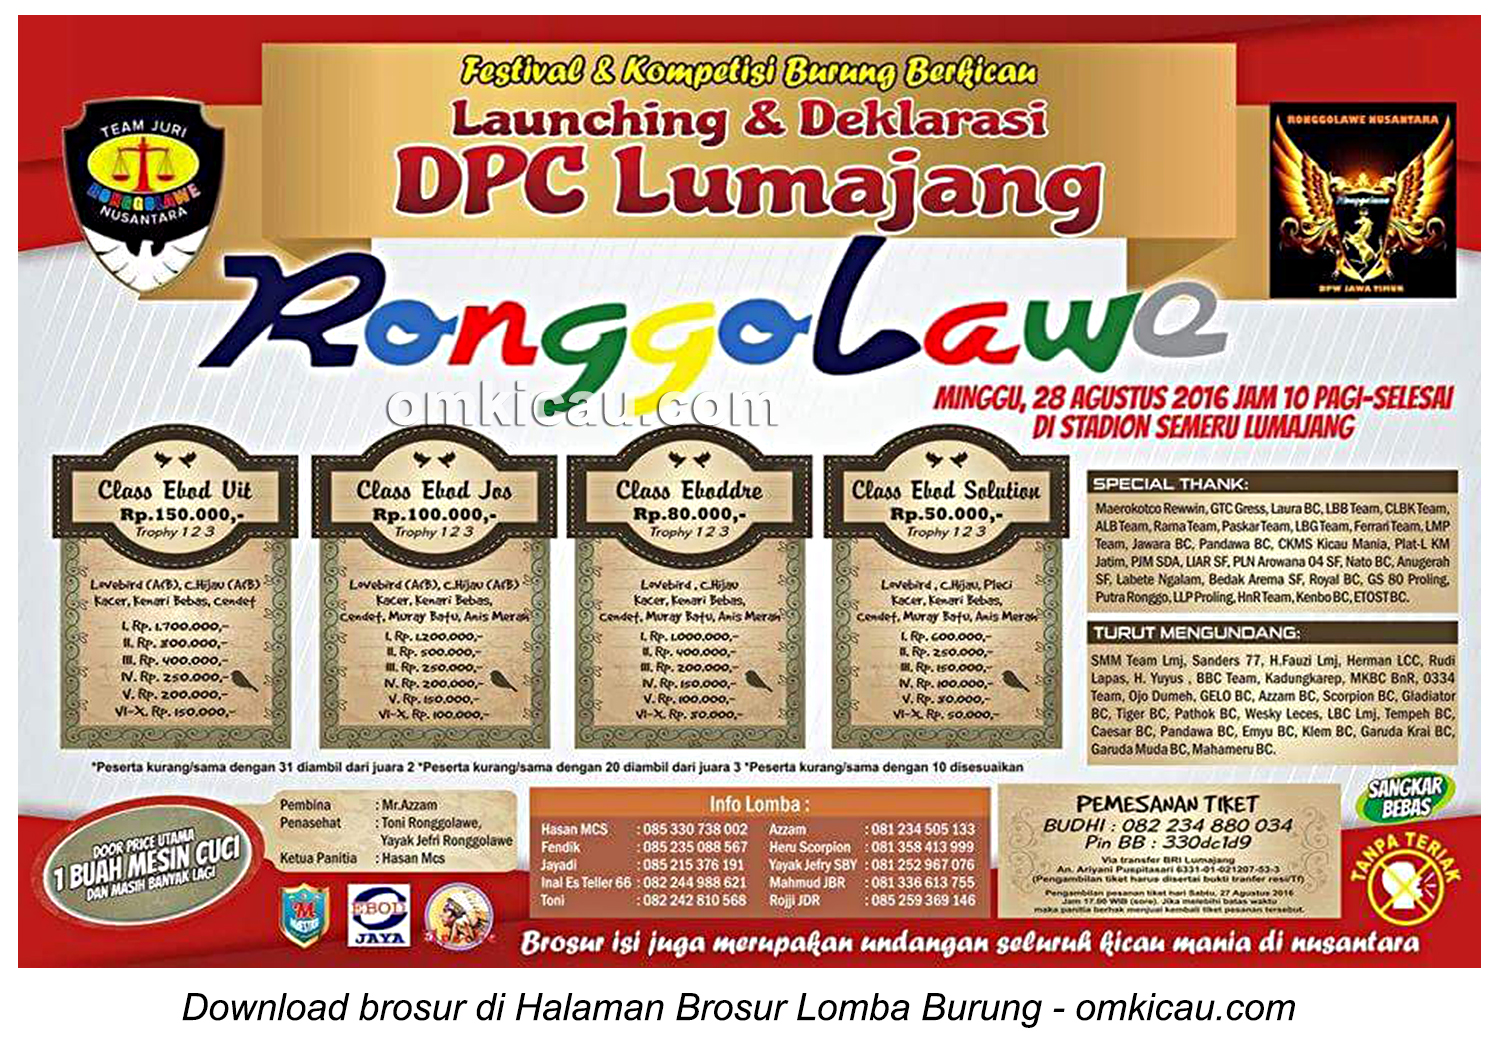 Brosur Lomba Burung Berkicau Launching Ronggolawe Nusantara DPC Lumajang, 28 Agustus 2016